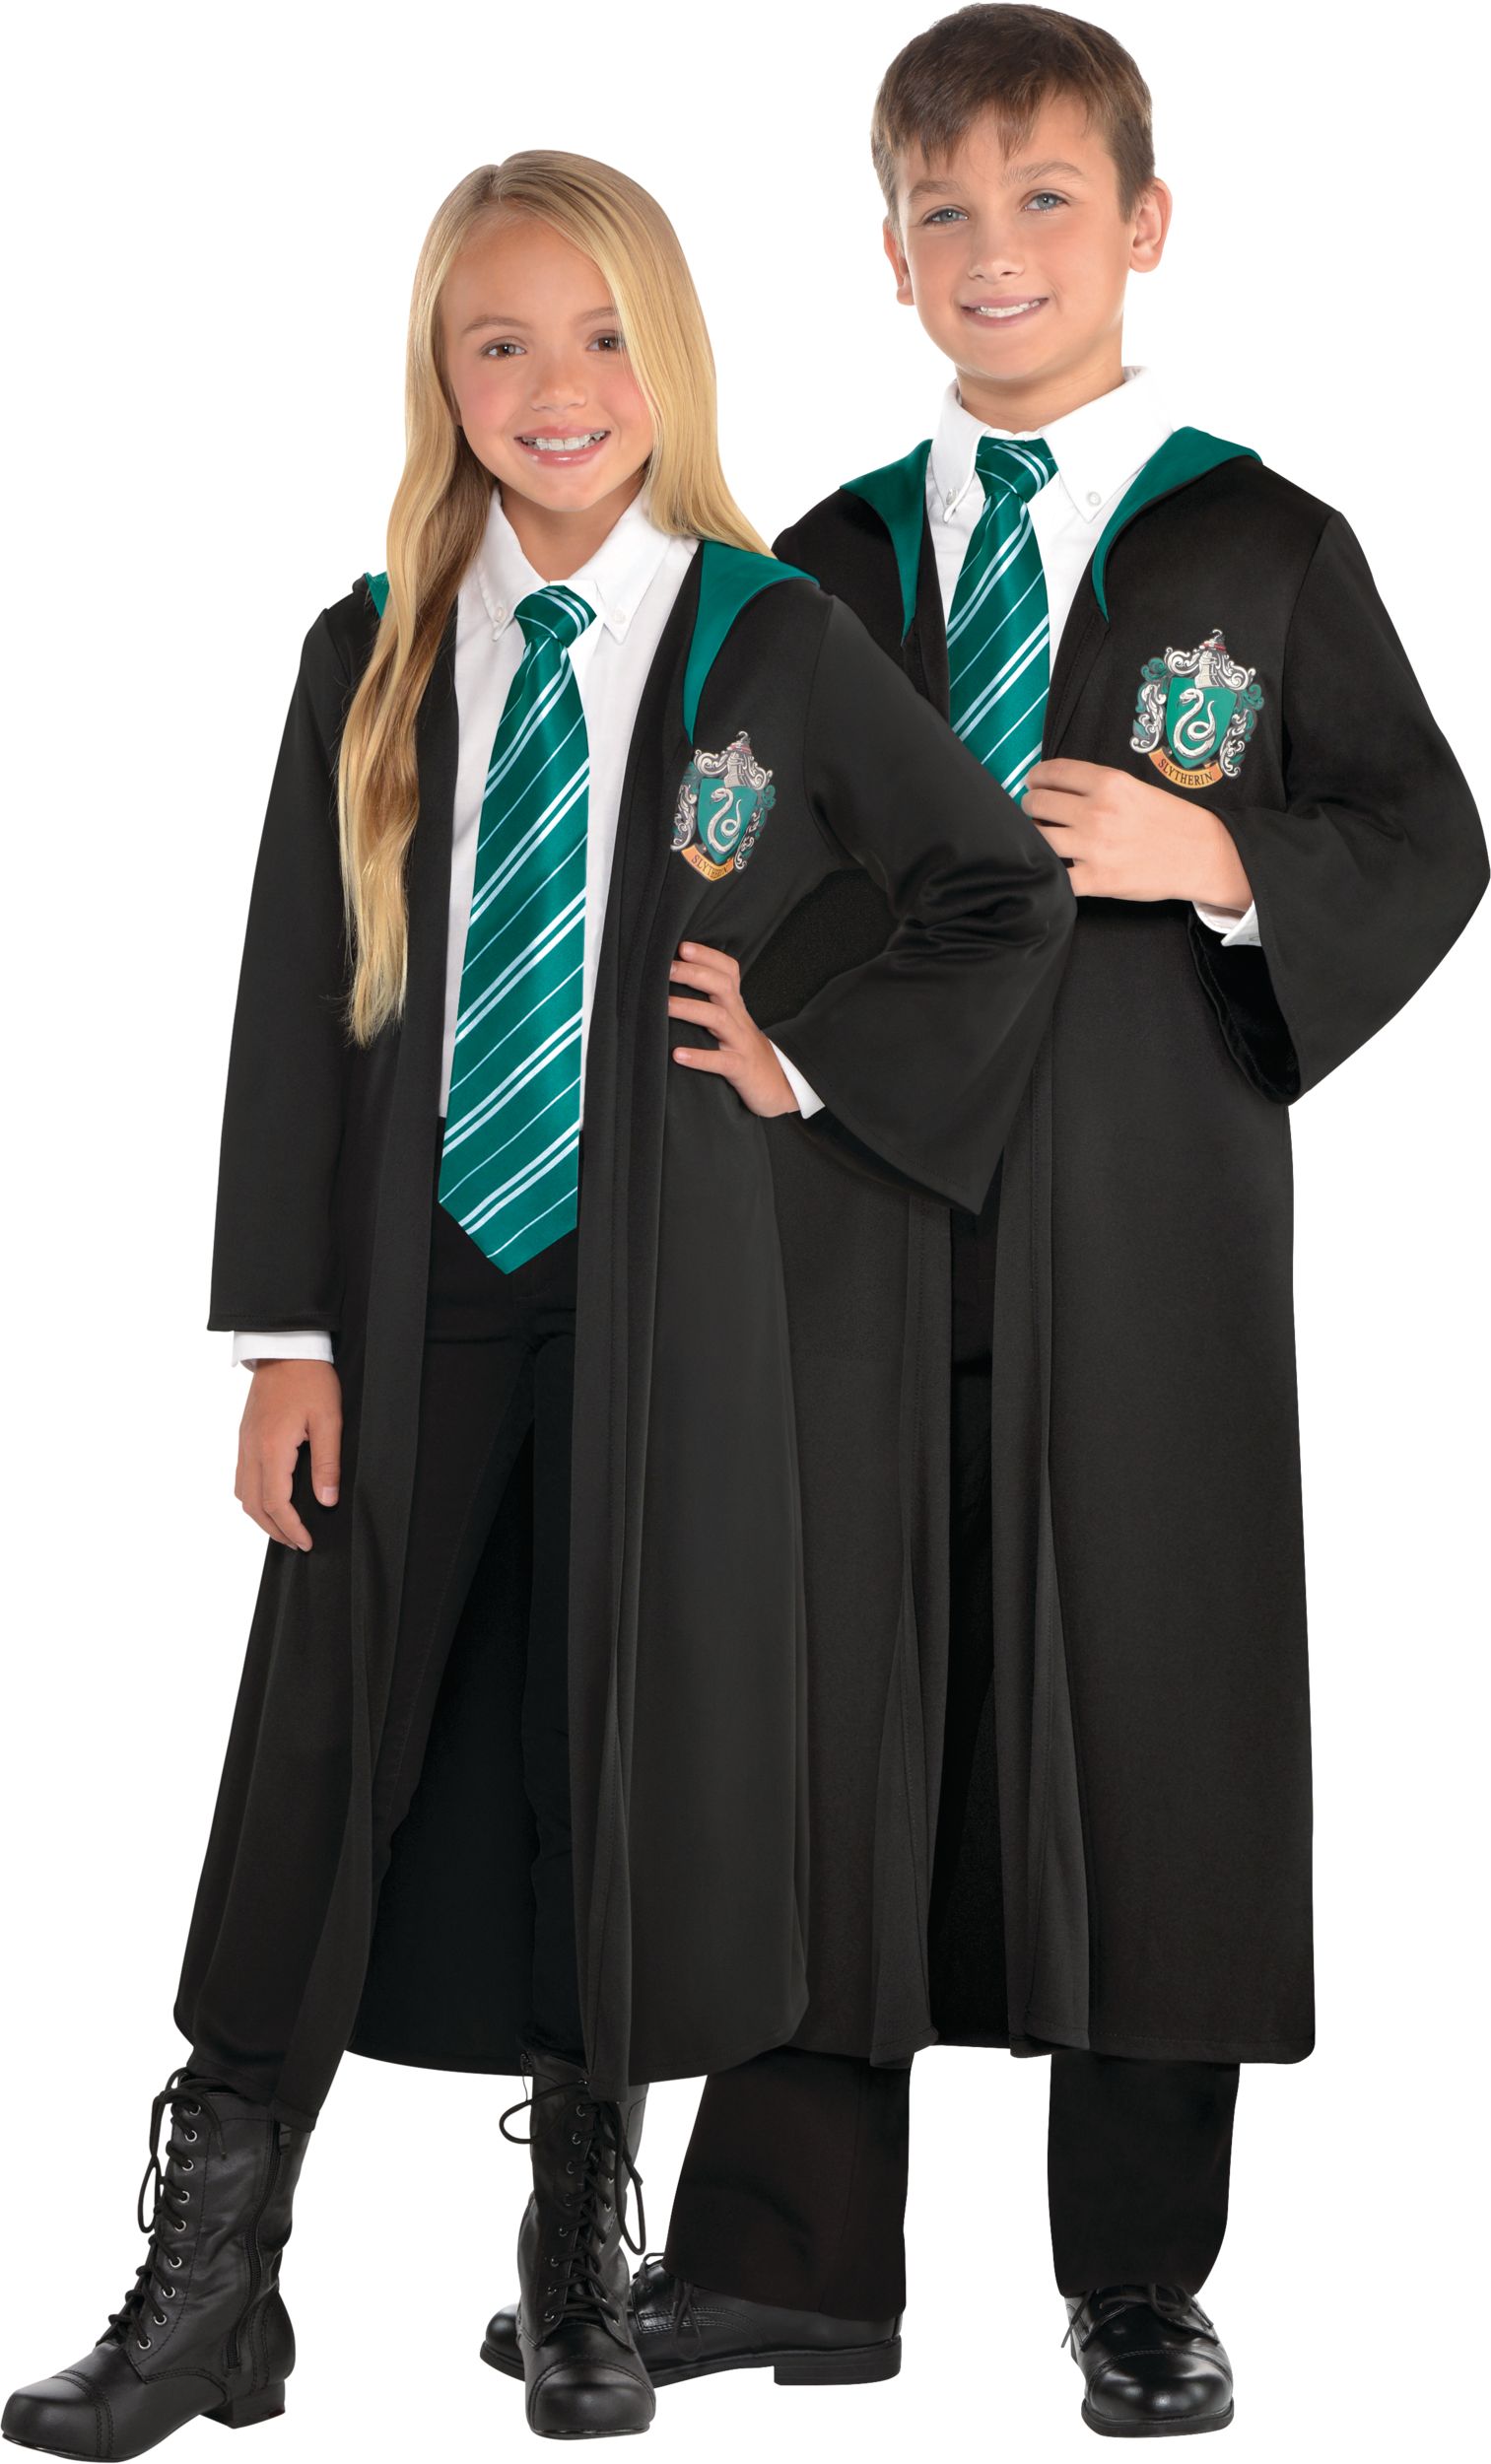 Harry Potter Robe - Adult Costume